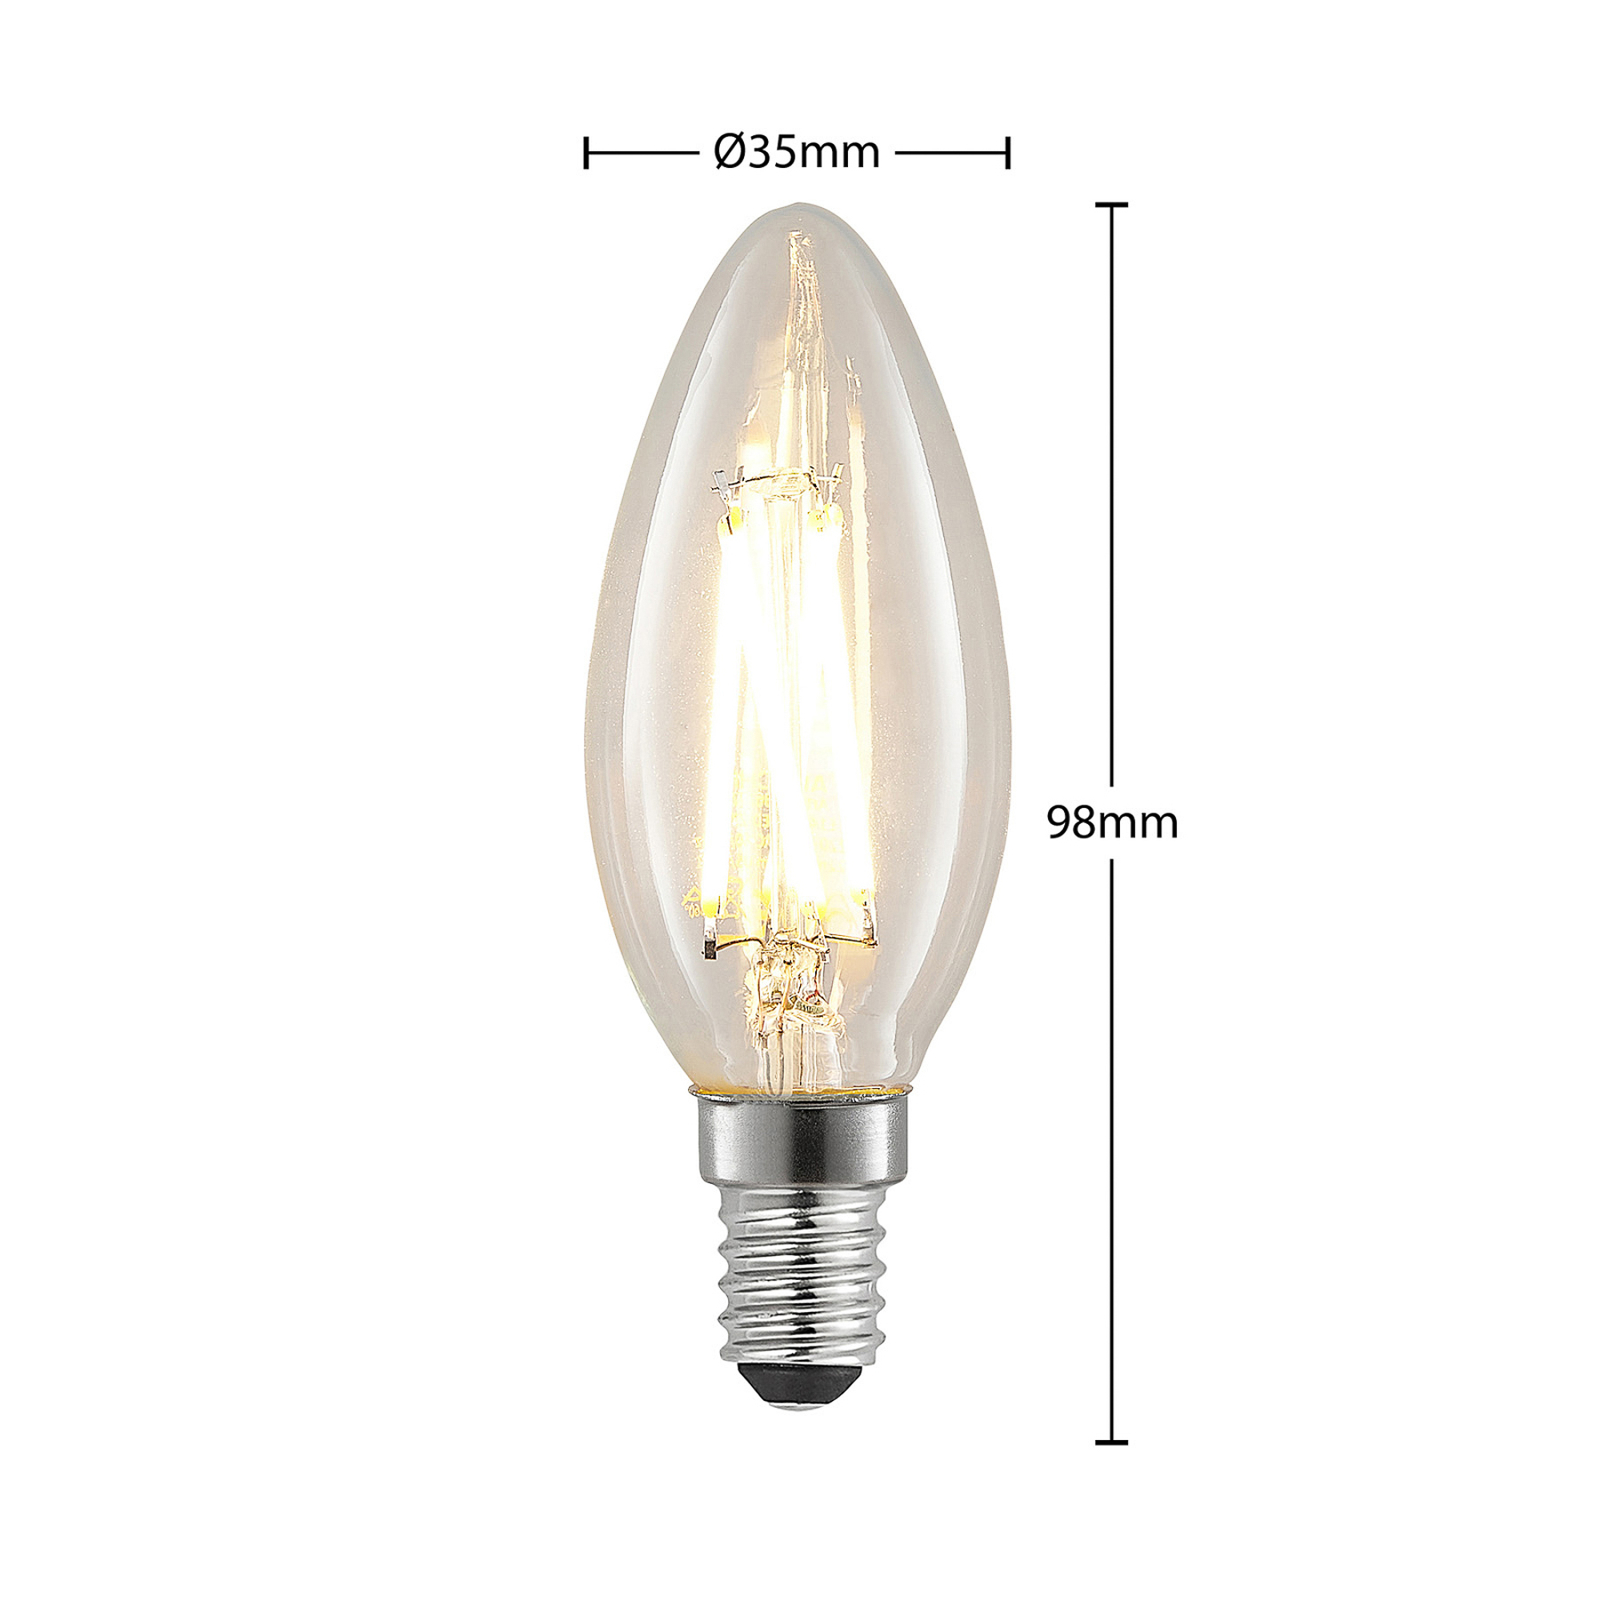 LED-filamentlampa E14 4W 827 ljus dimbar 5-pack